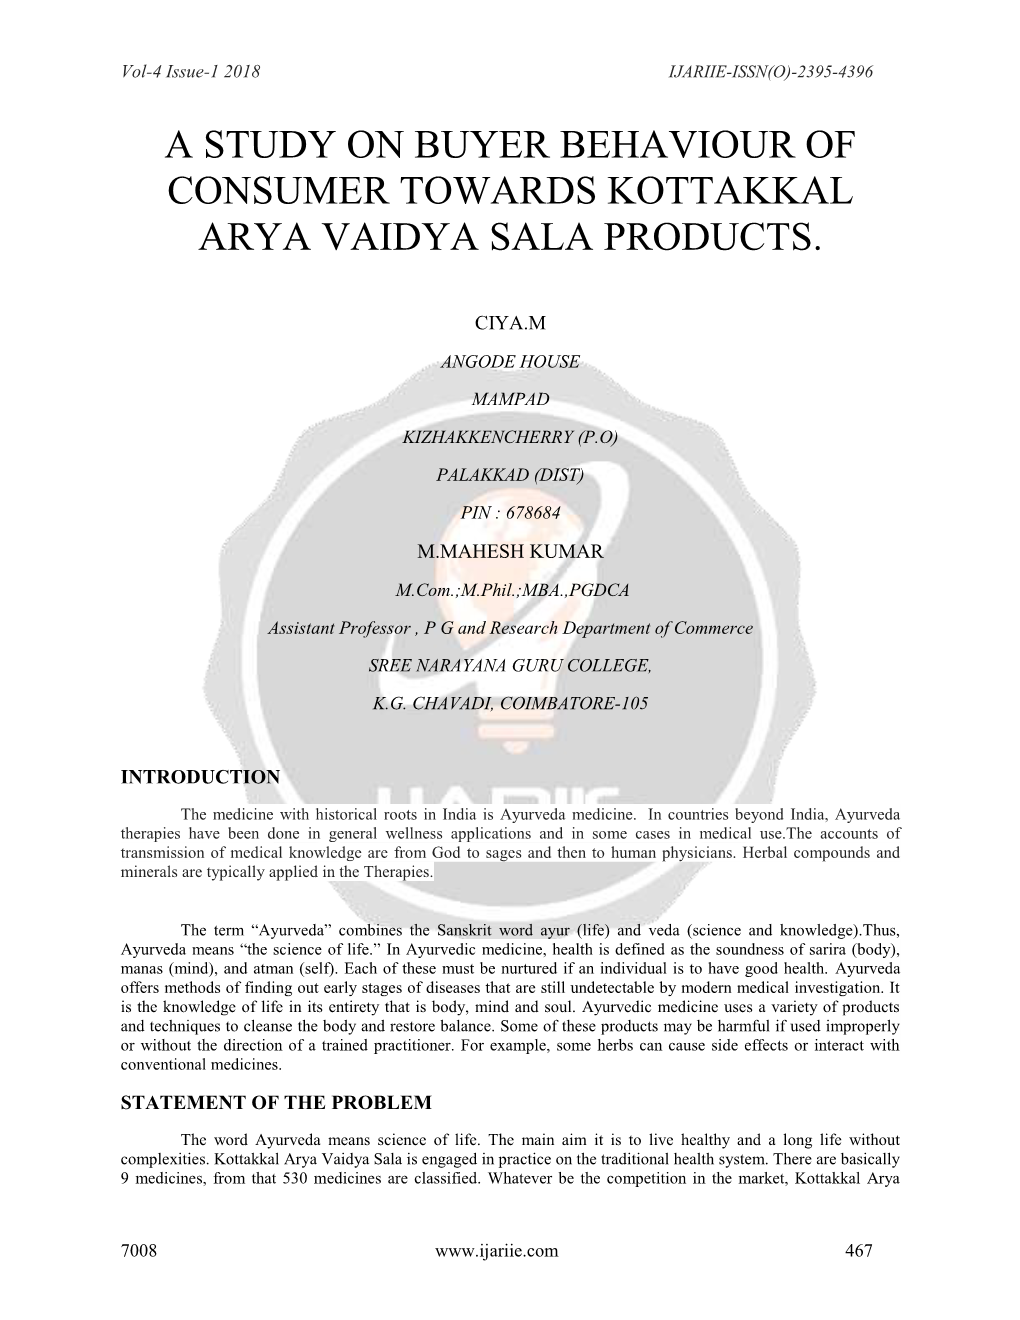 A Study on Buyer Behaviour of Consumer Towards Kottakkal Arya Vaidya Sala Products